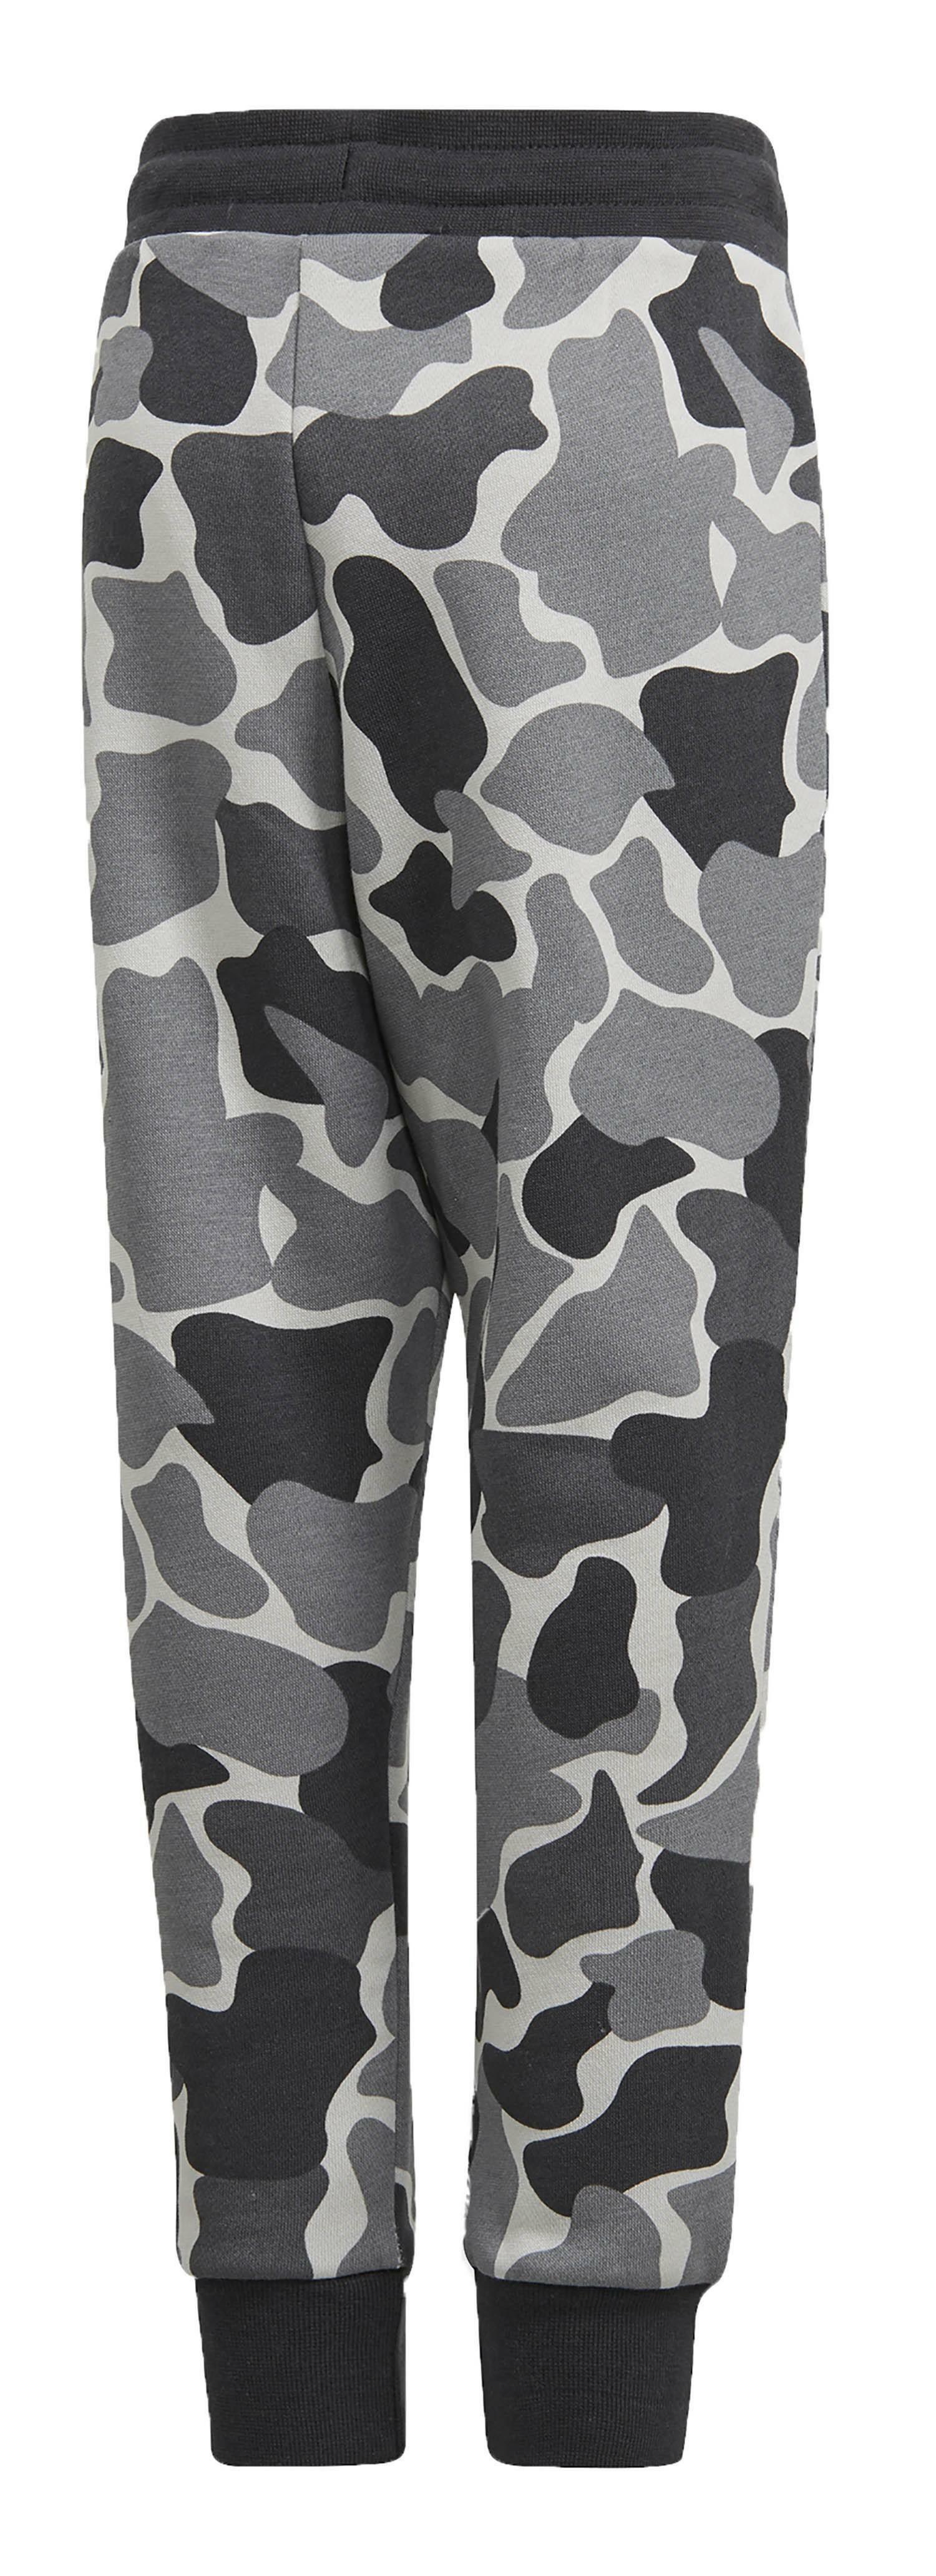 adidas adidas trf hood felpa bambino grigio camouflage dh2470